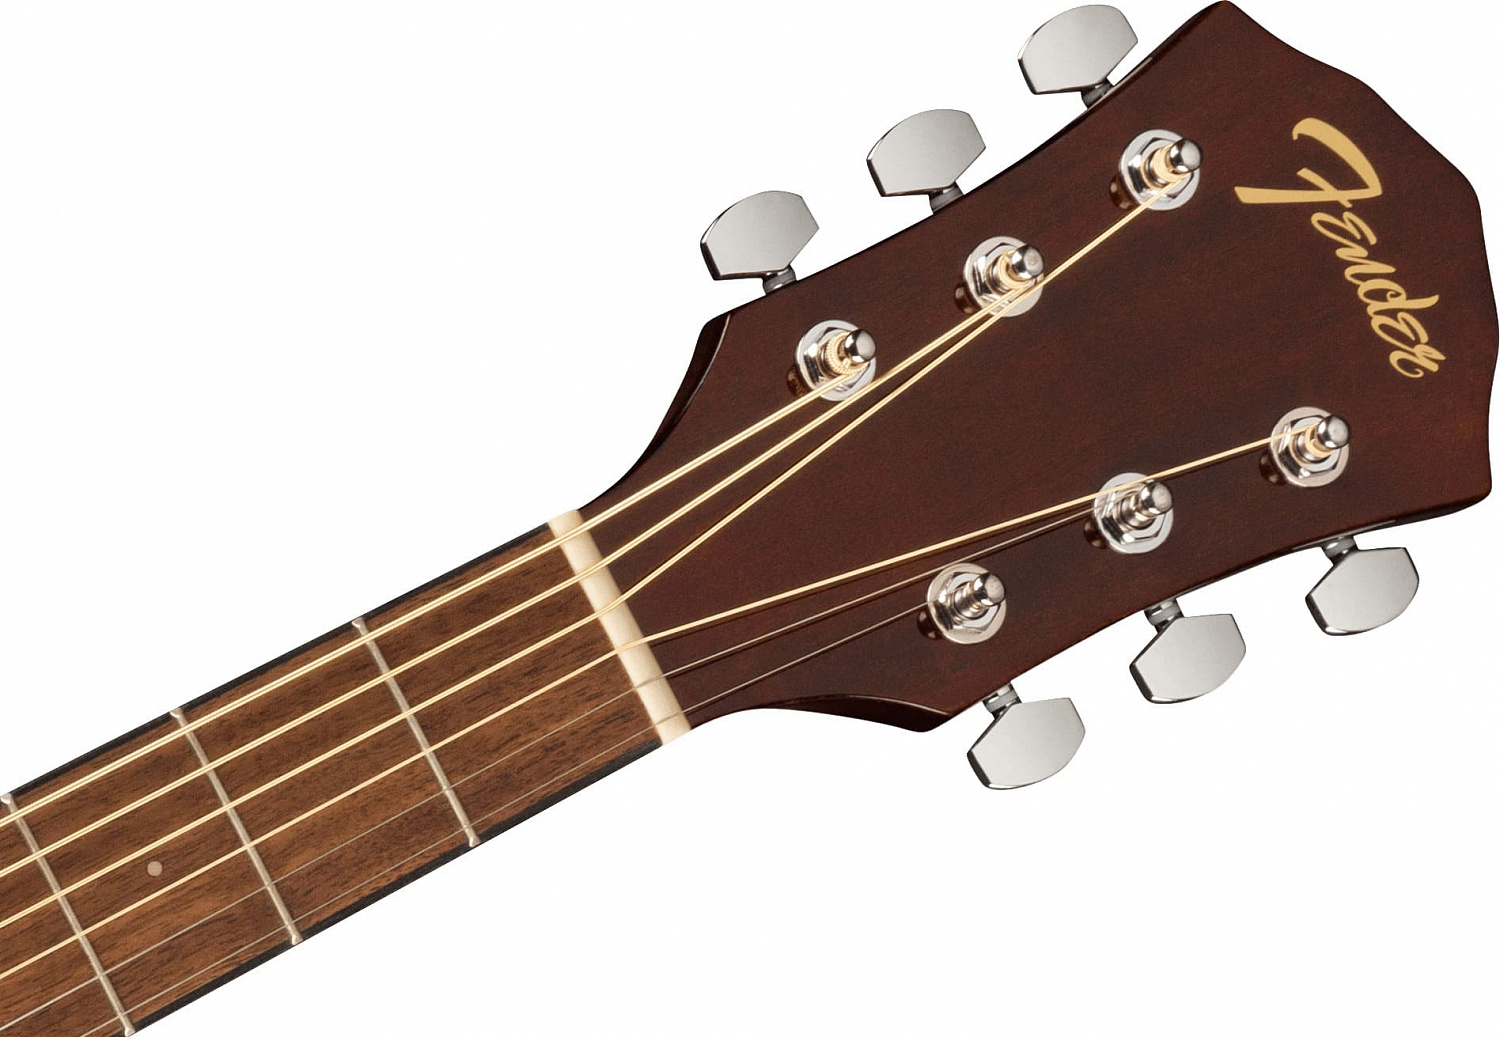 Fender FA-135 Concert Natural  акустическая гитара, цвет натуральный